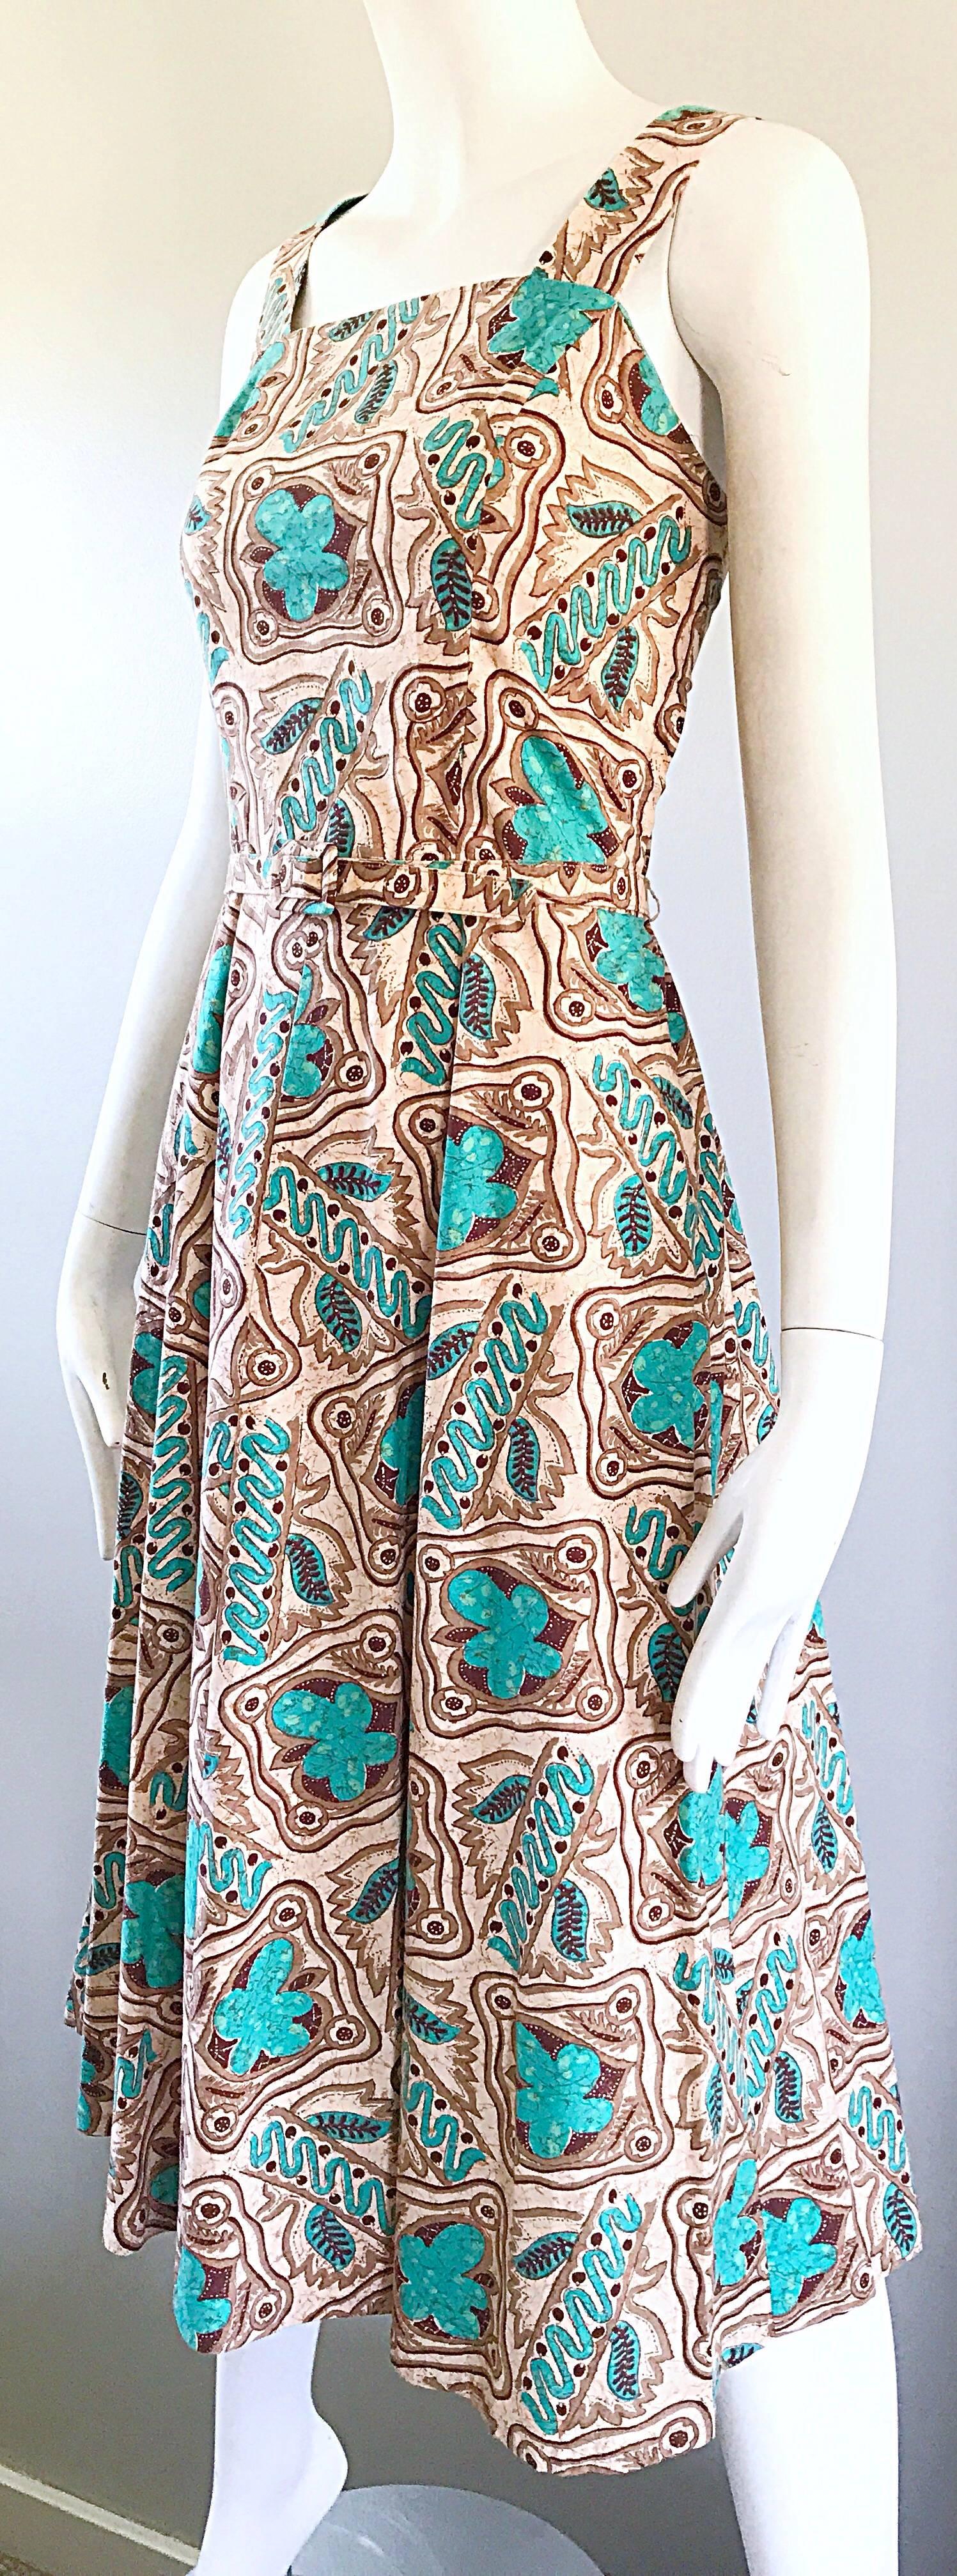 Women's Wonderful 1950s Batik Print Teal & Brown Fit and Flare Belted Vintage 50s Dress